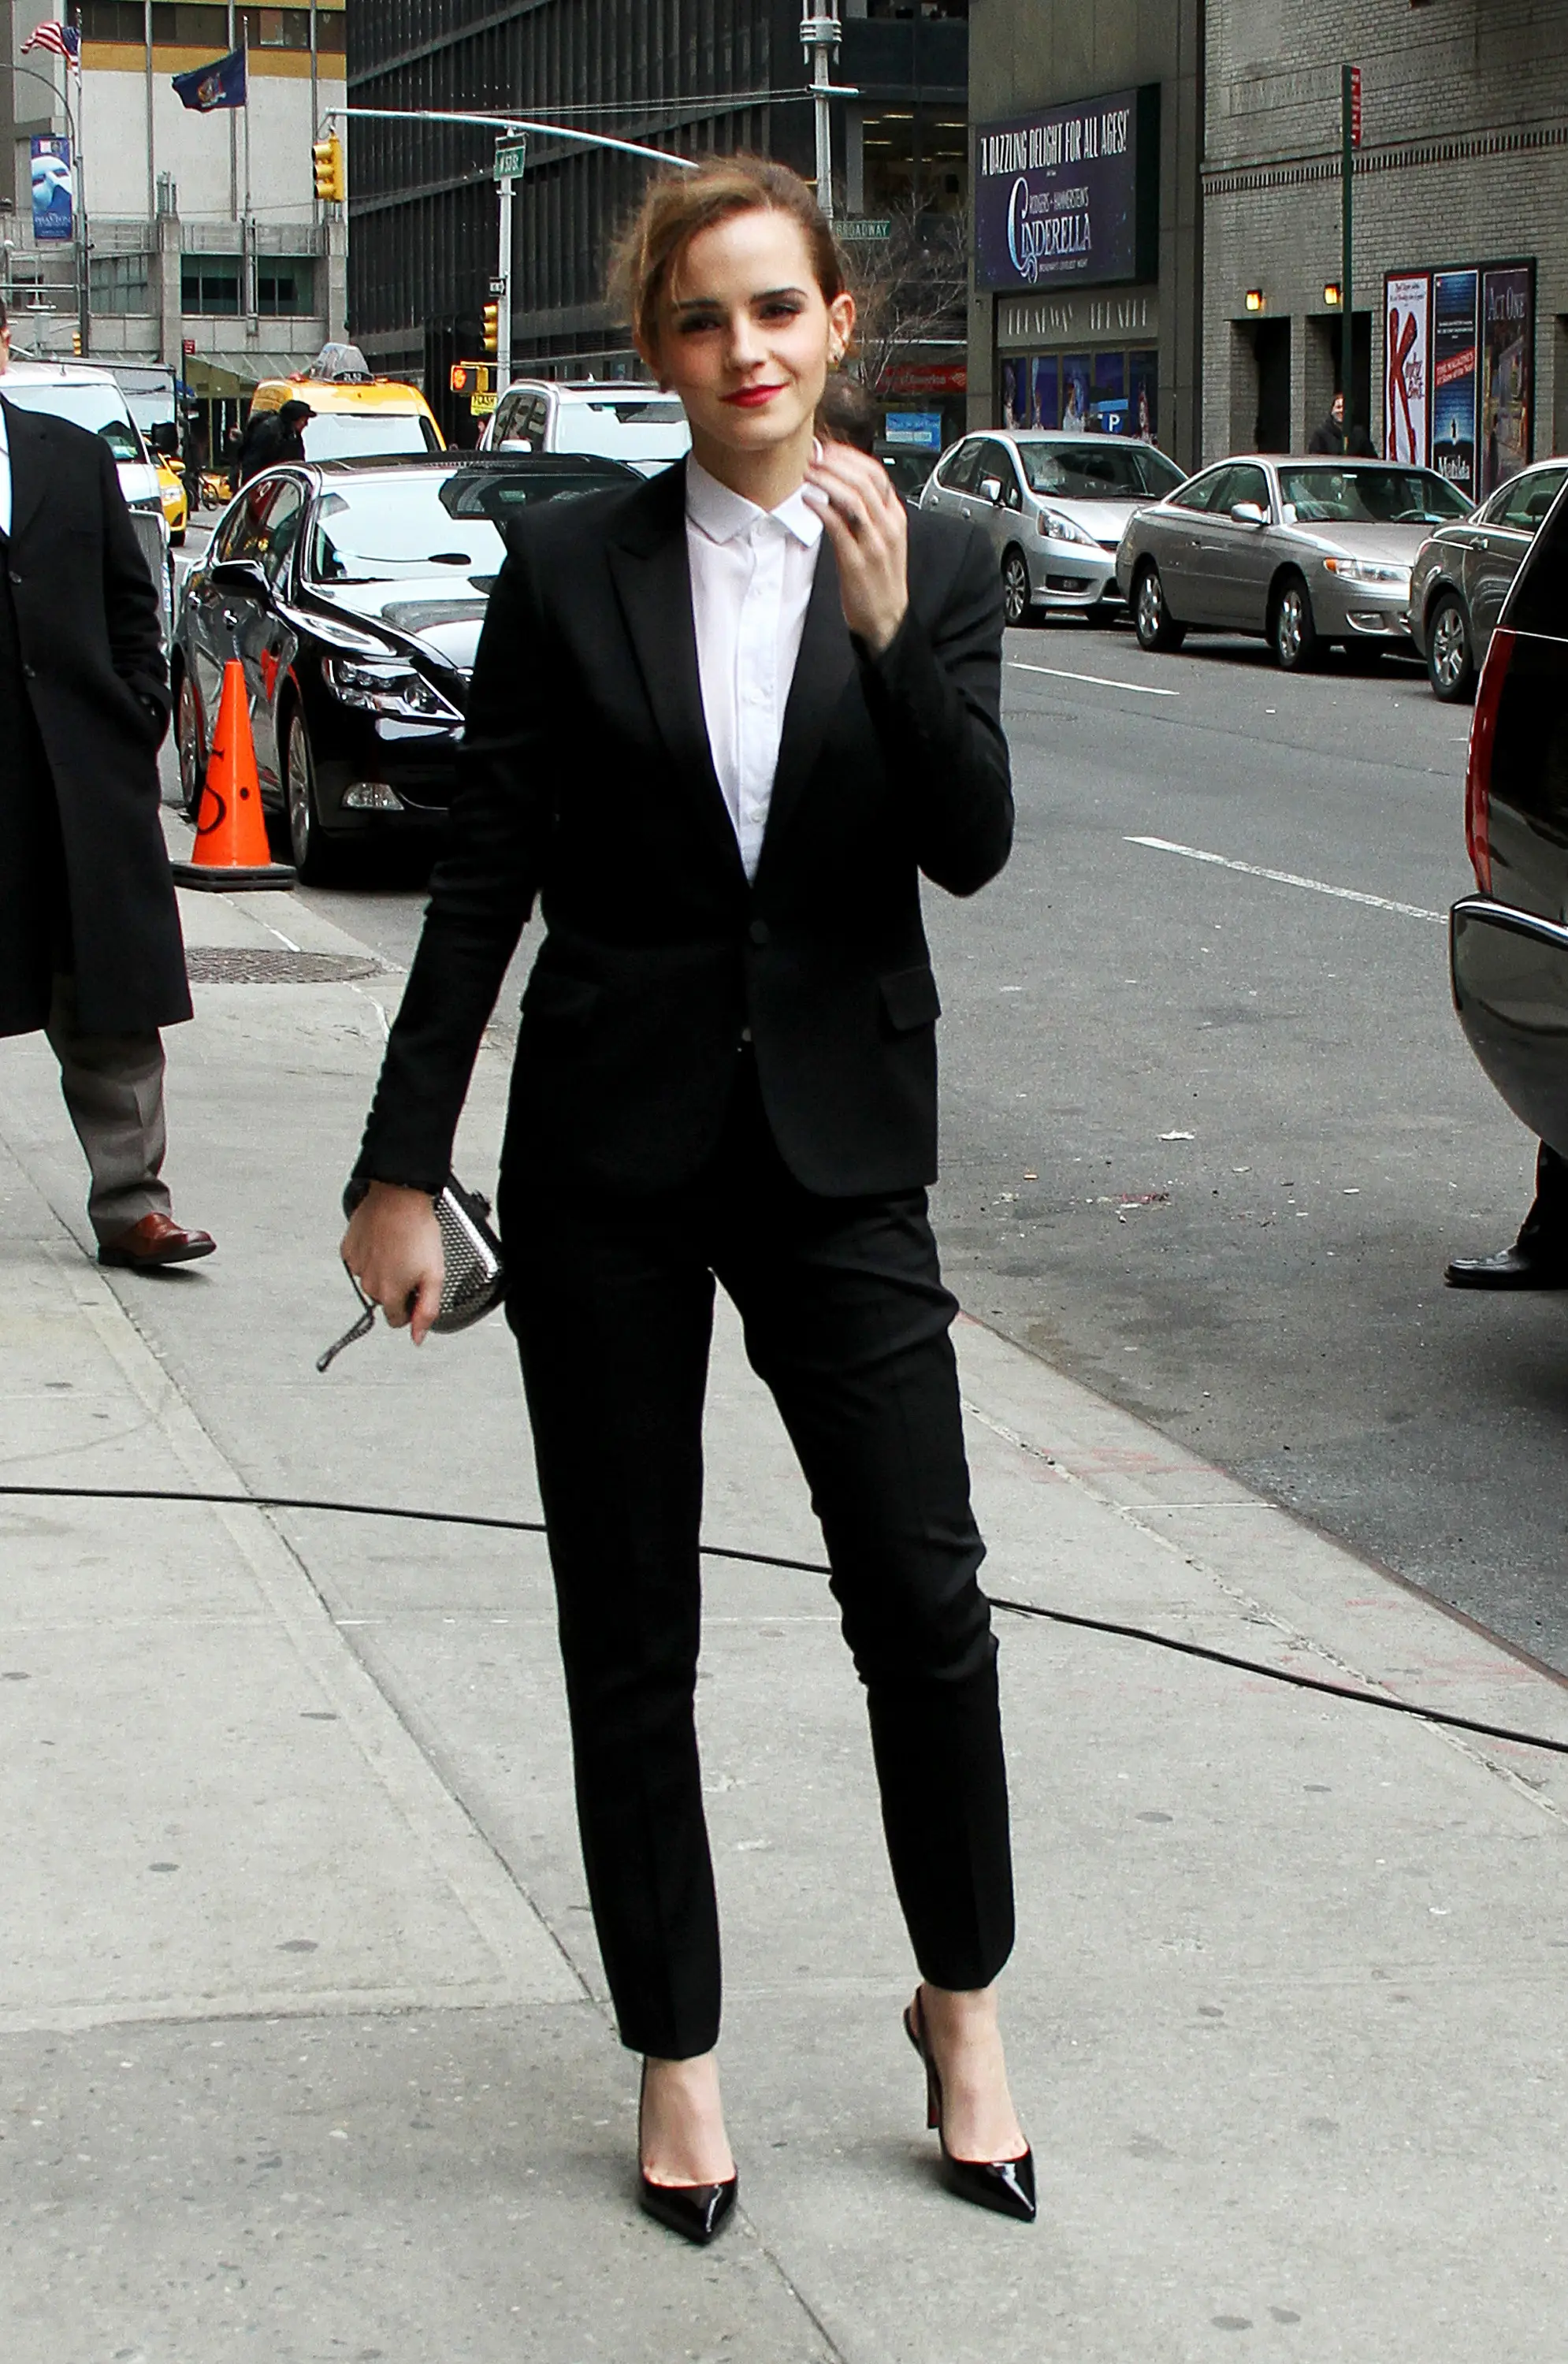 Tampil memukau ke kantor dengan blazer ala Emma Watson. (Image: themetropolist.com)